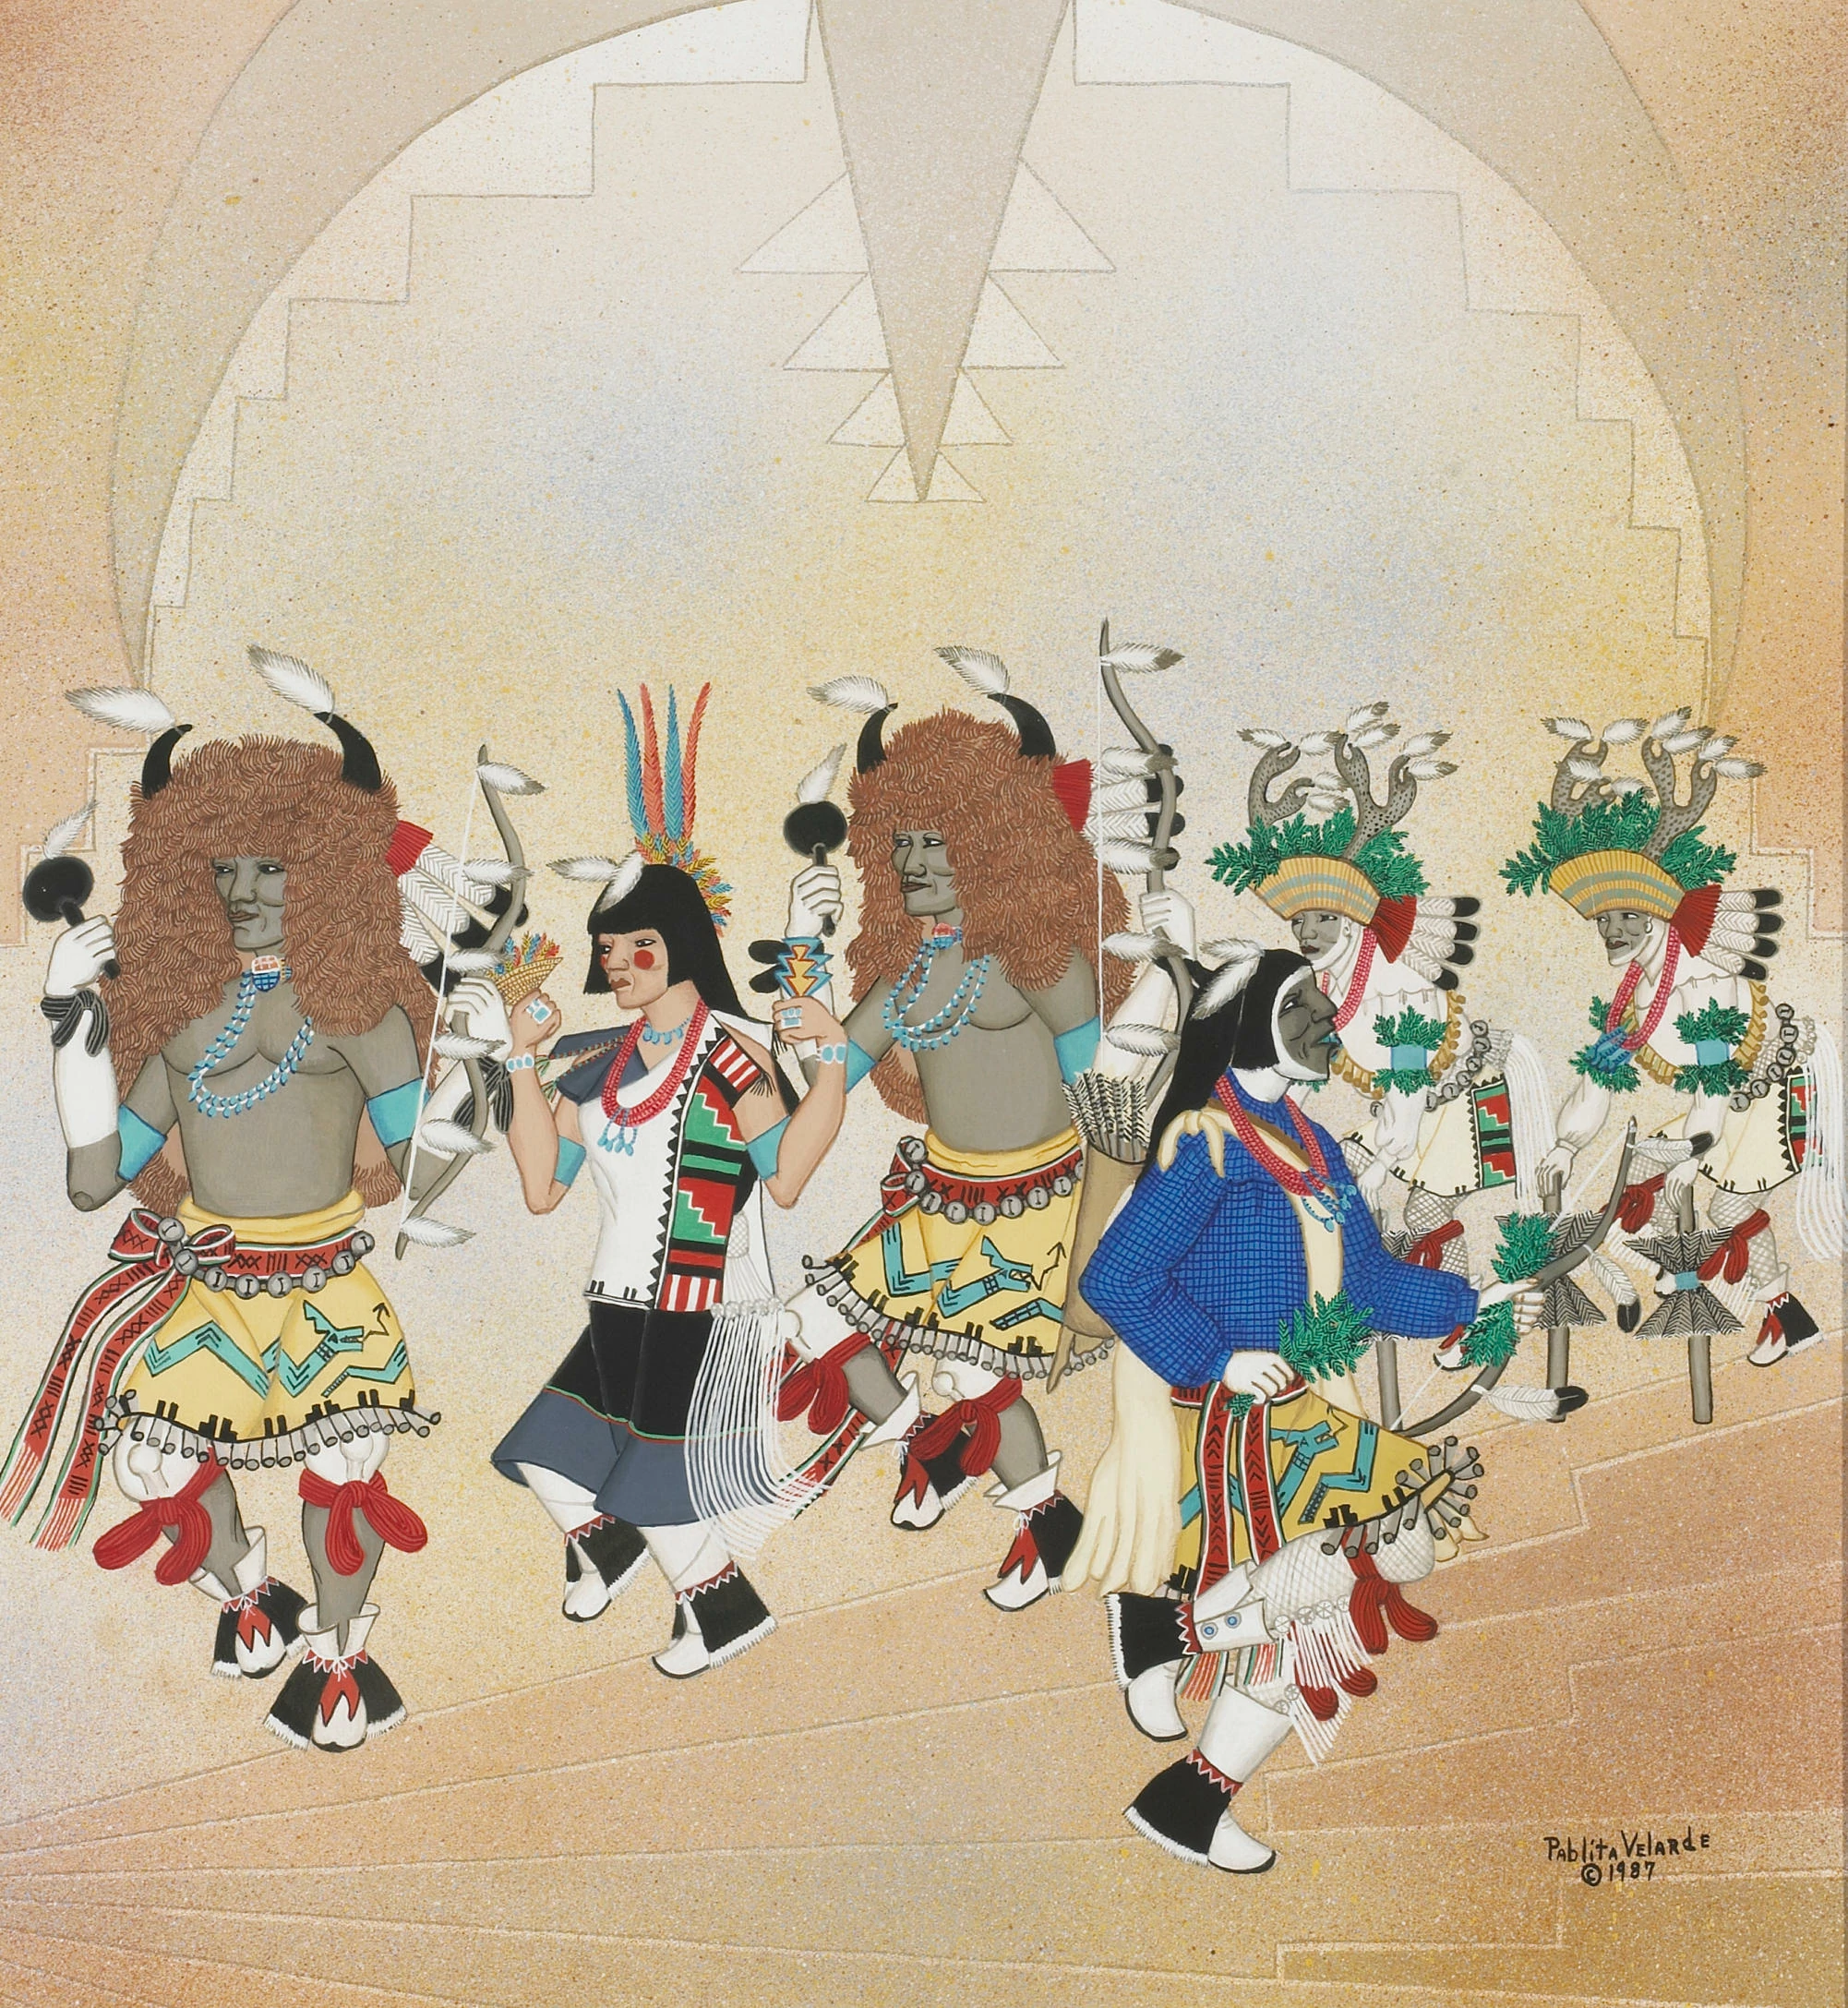 Six Pueblo Dancers, Pablita Velarde